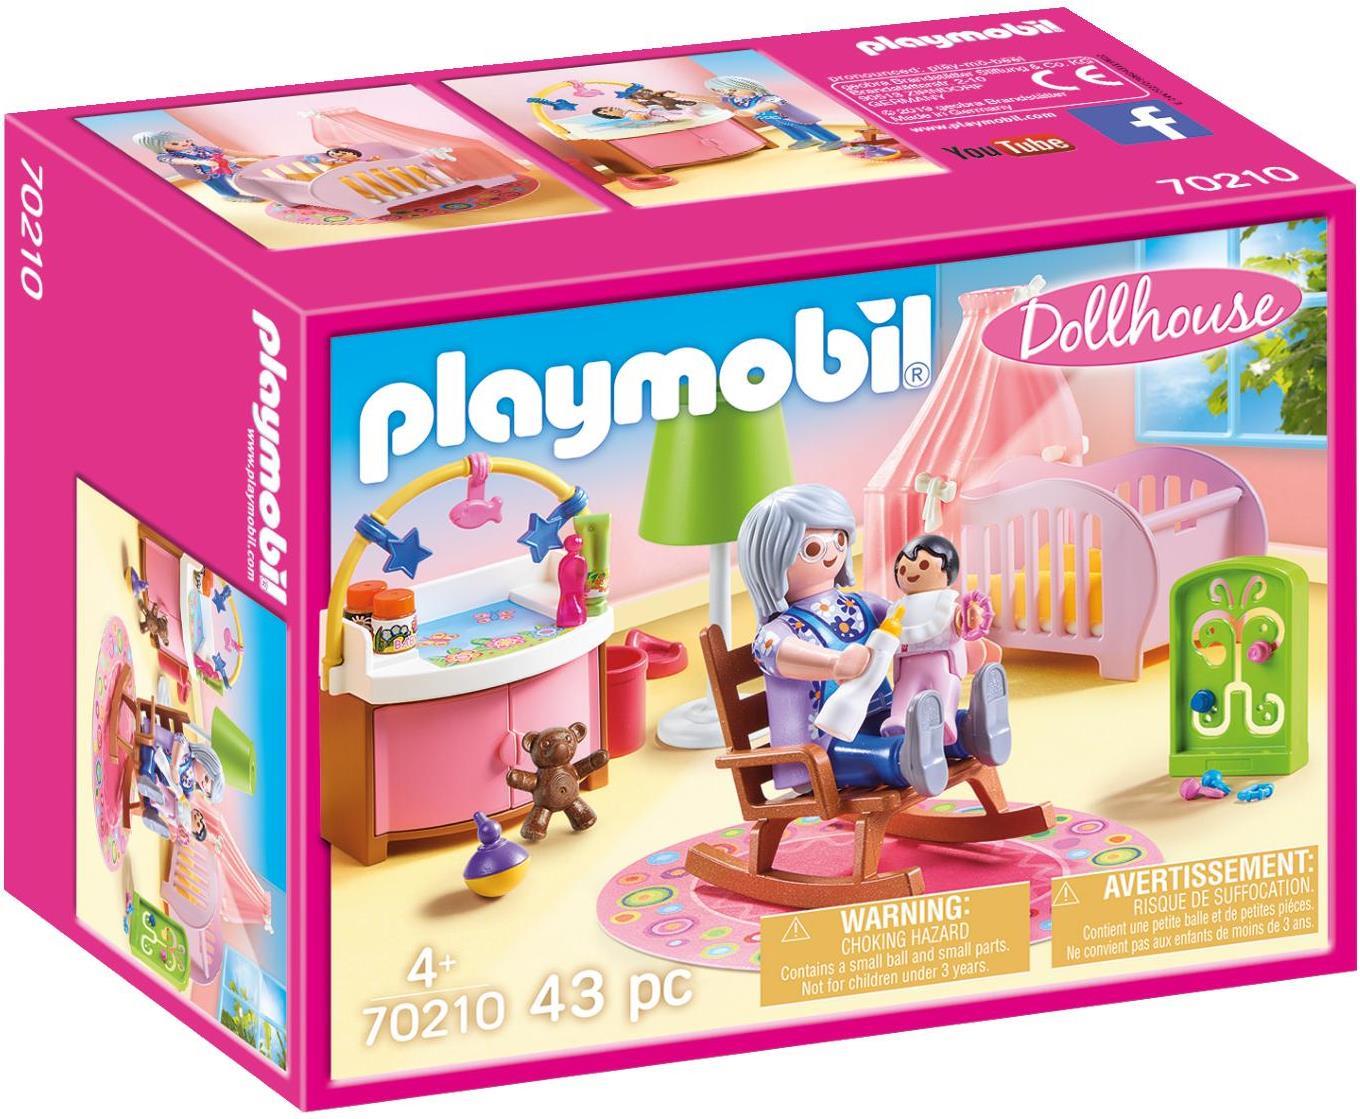 Playmobil Dollhouse 70210 (70210)